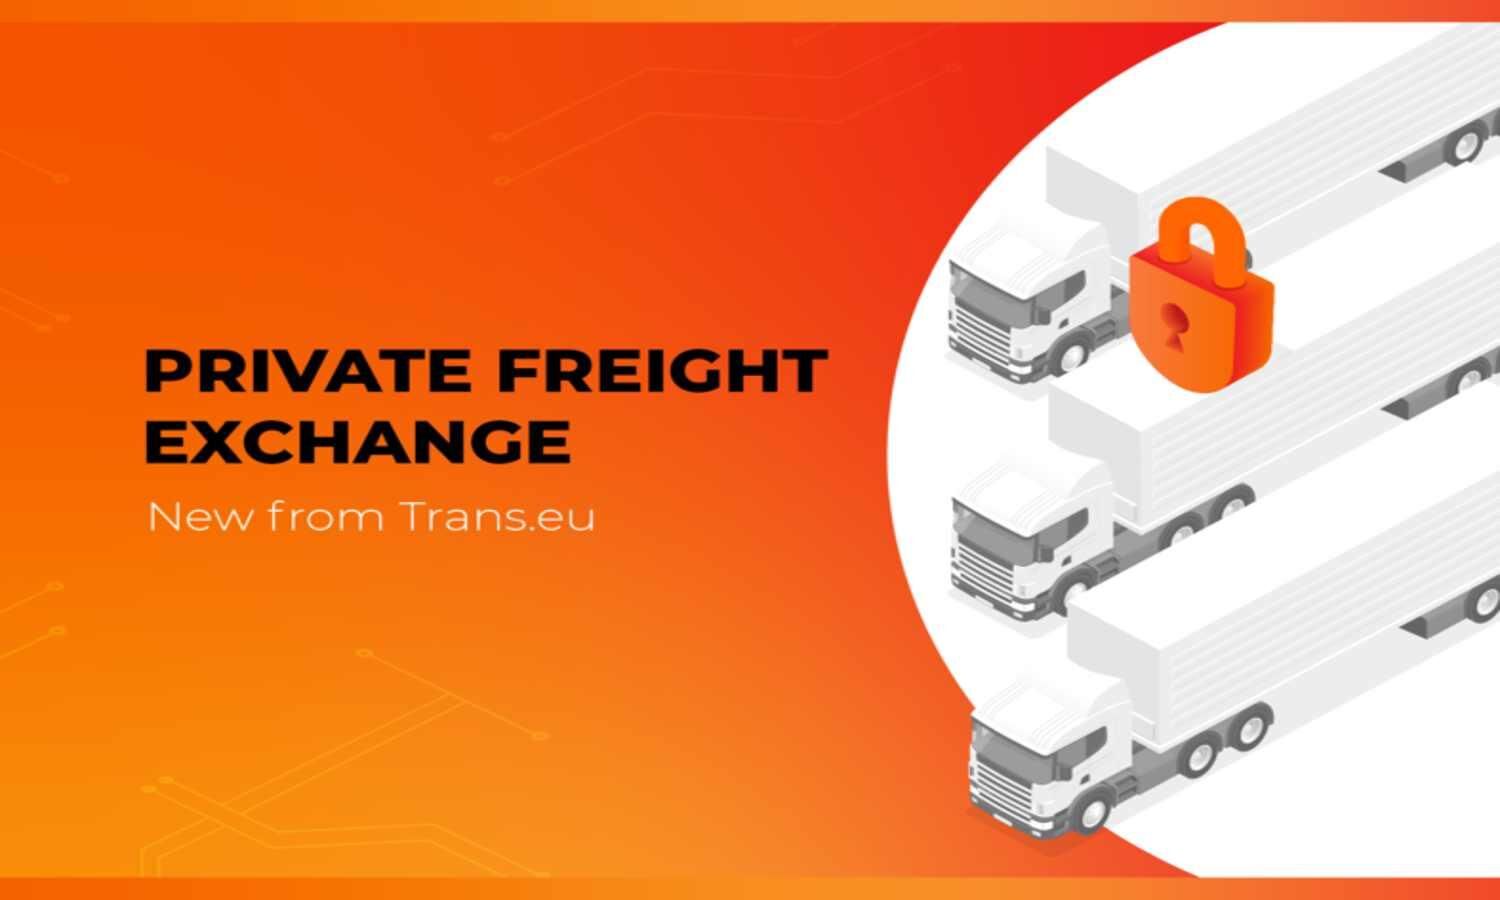 Trans.eu launches Private Freight Exchange platform